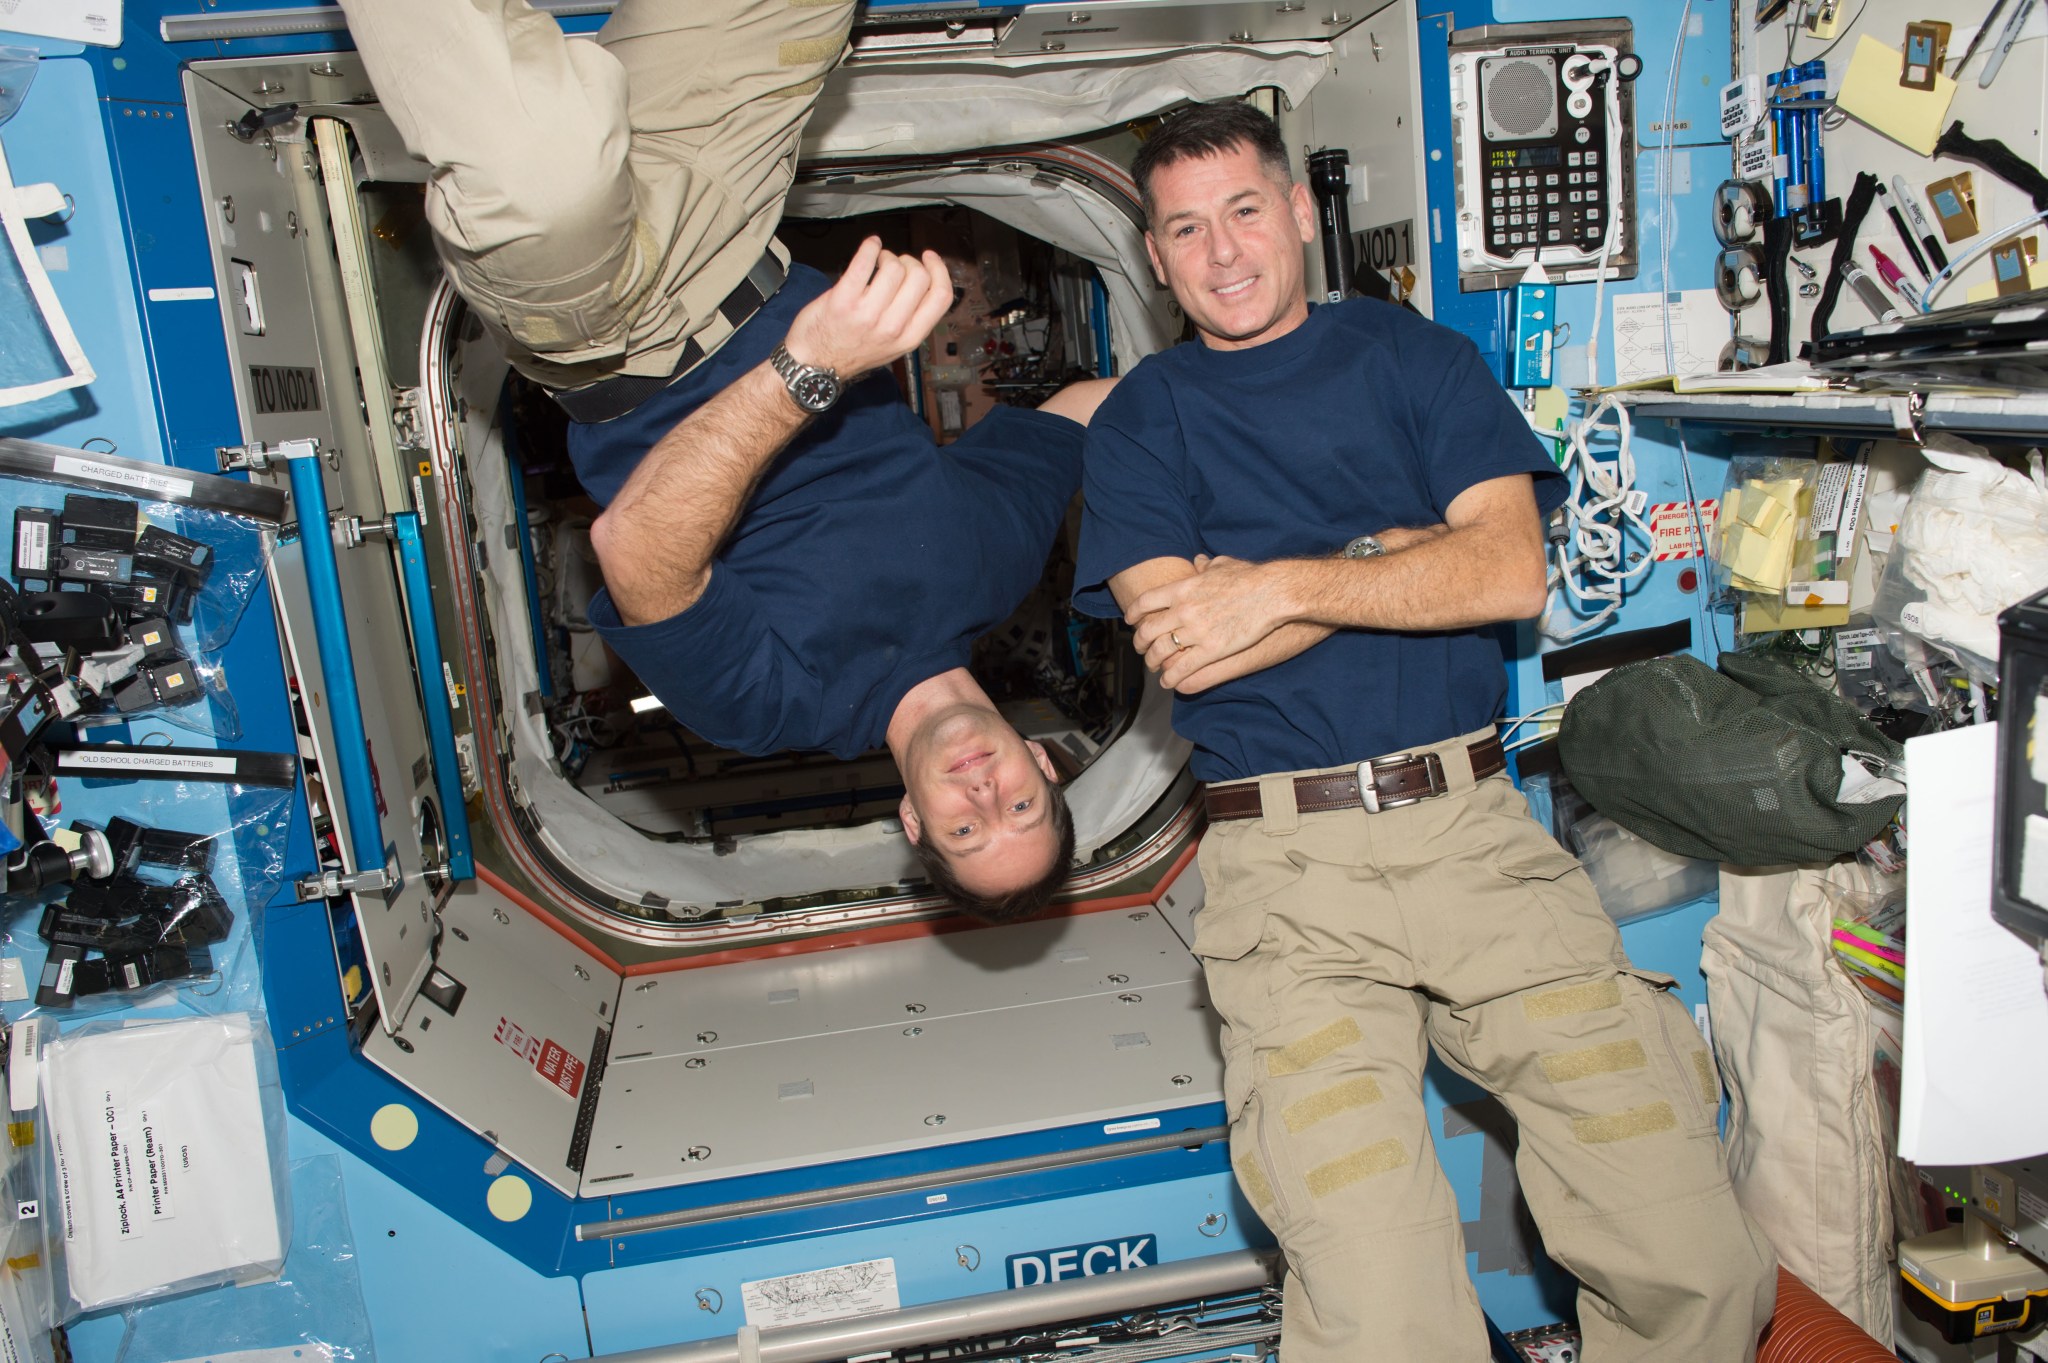 Expedition 66 crewmembers Thomas Pesquet of ESA (European Space Agency) and Shane Kimbrough of NASA